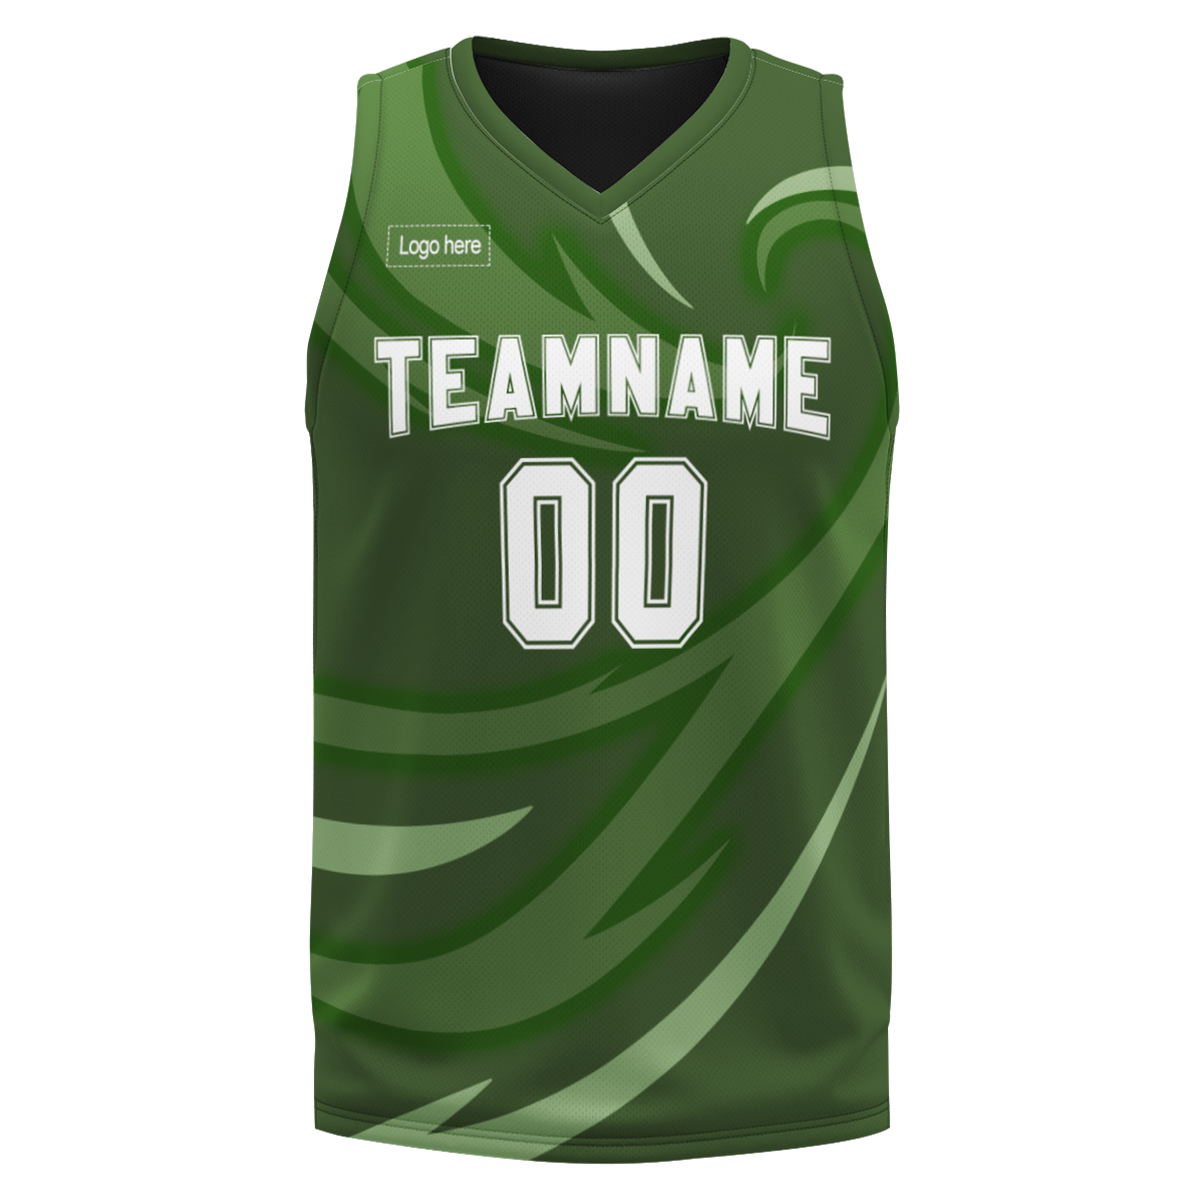 factory-oem-service-custom-basketball-uniforms-printed-sport-clothes-summer-basketball-jerseys-at-cj-pod-4